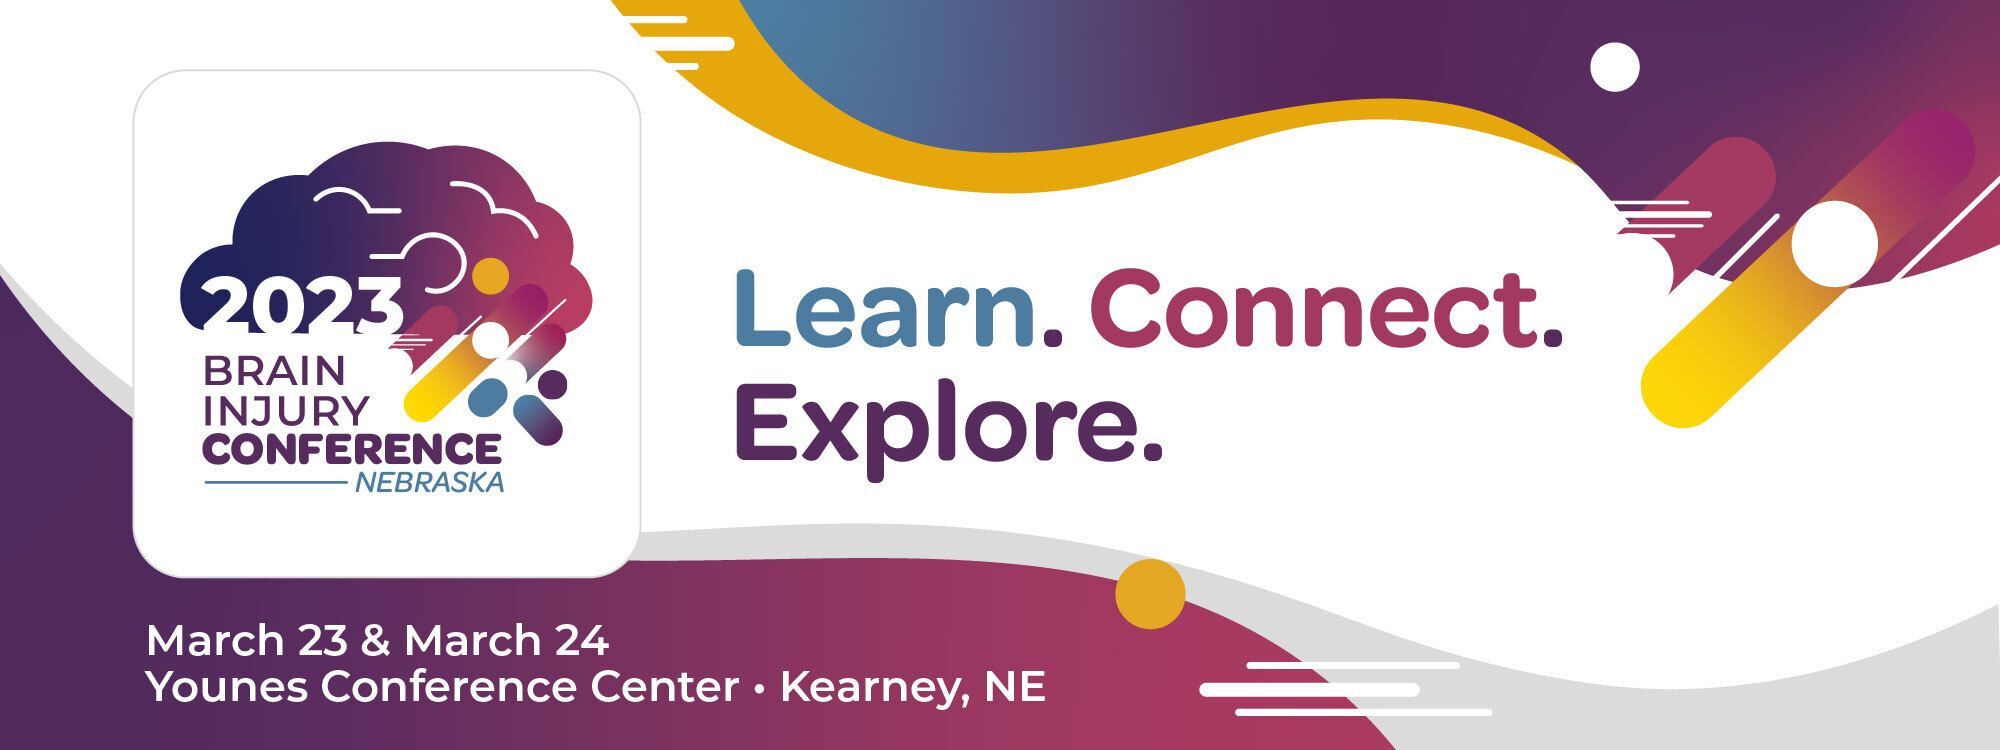 2023 Nebraska Brain Injury Conference. Learn. Connect. Explore. March 23 and 24. Younes Conference Center, Kearney, Nebraska.